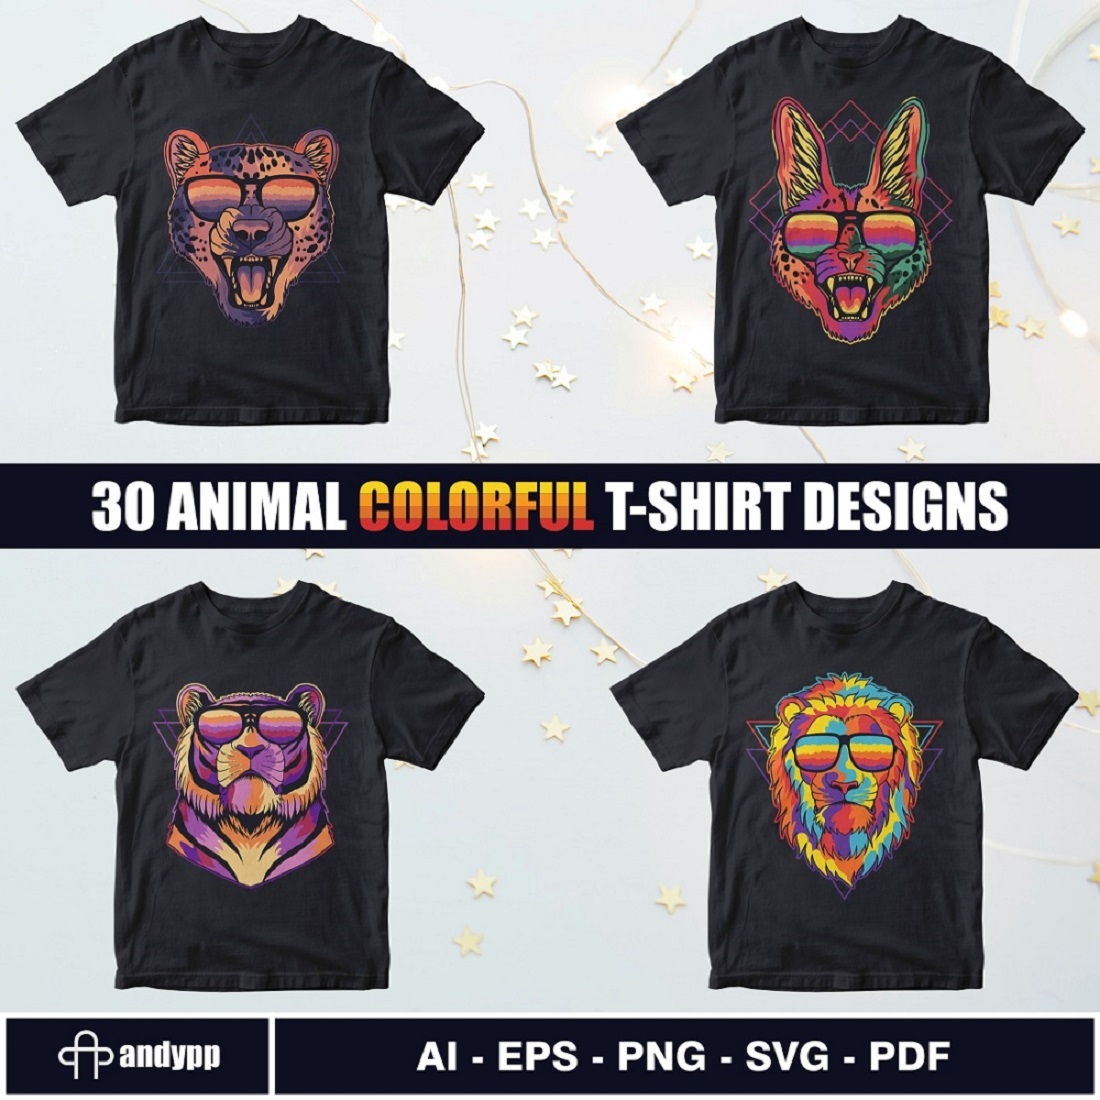 30 Animals Colorful Retro T-shirt Designs Cover Image.